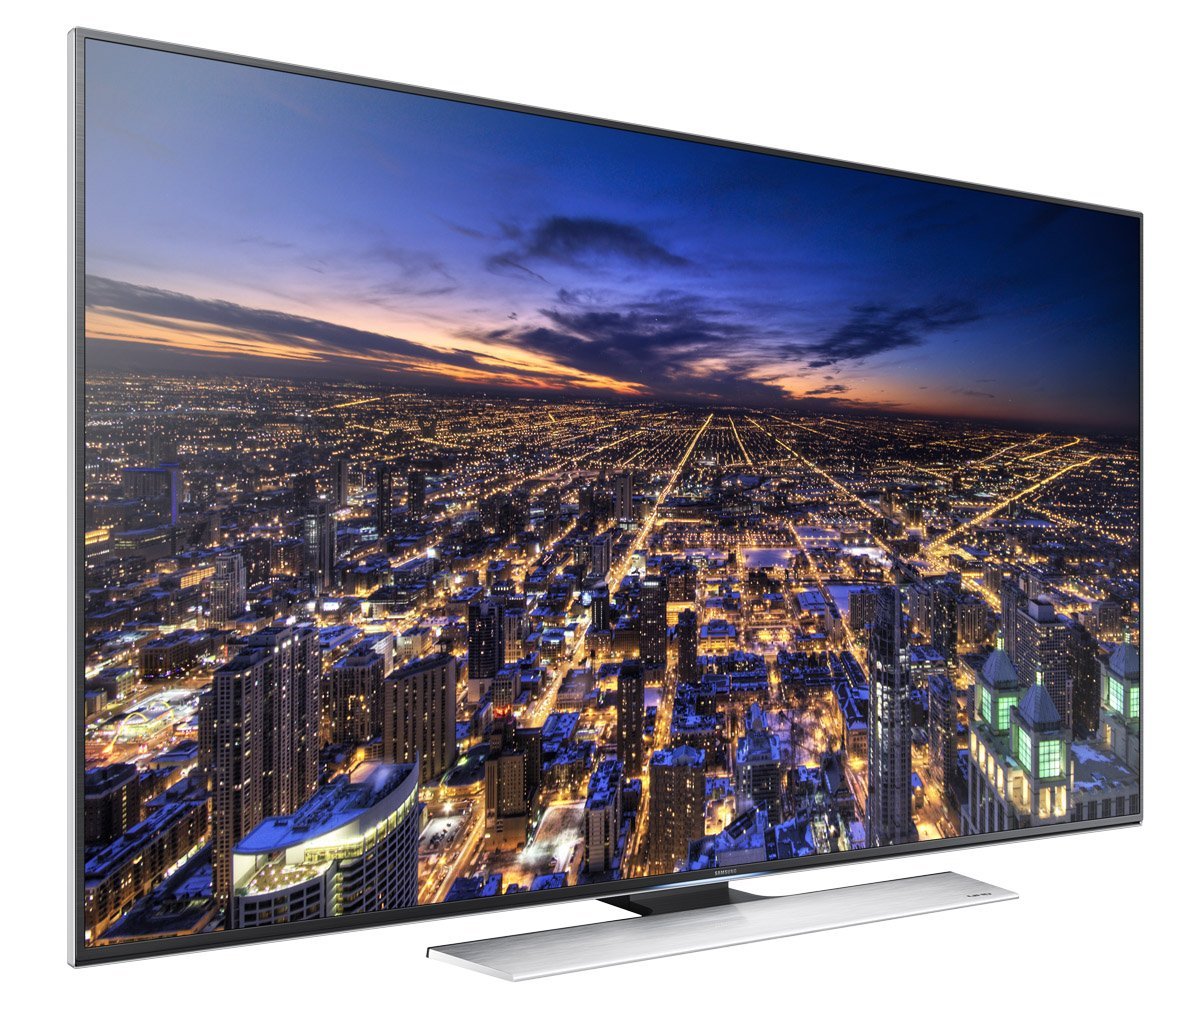 2014-Samsung-3D-Smart-LED-TV-UN85HU8550